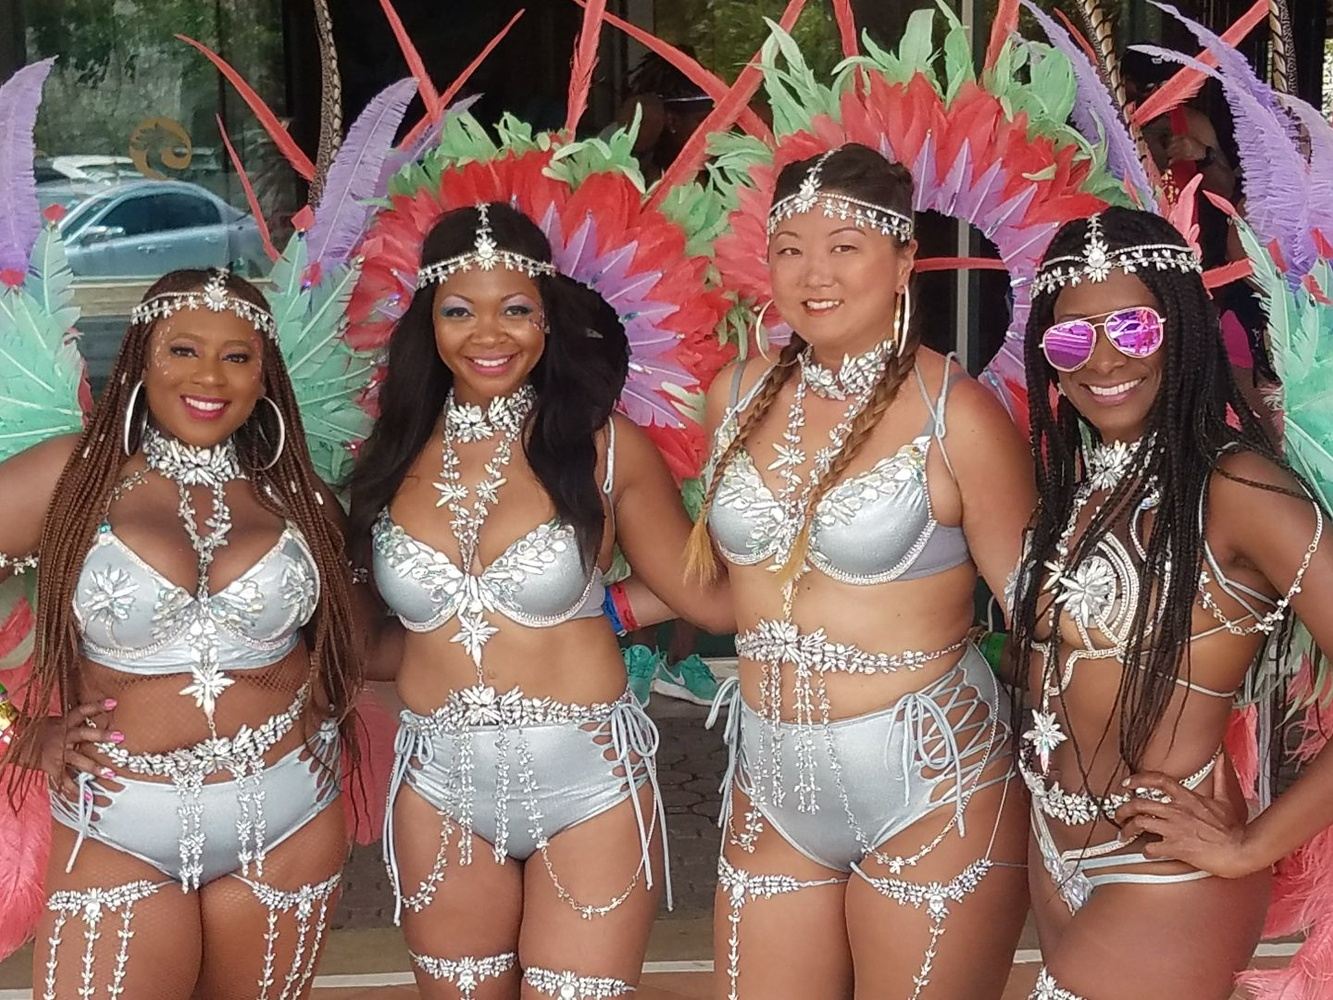 Jamaica Carnival 2019